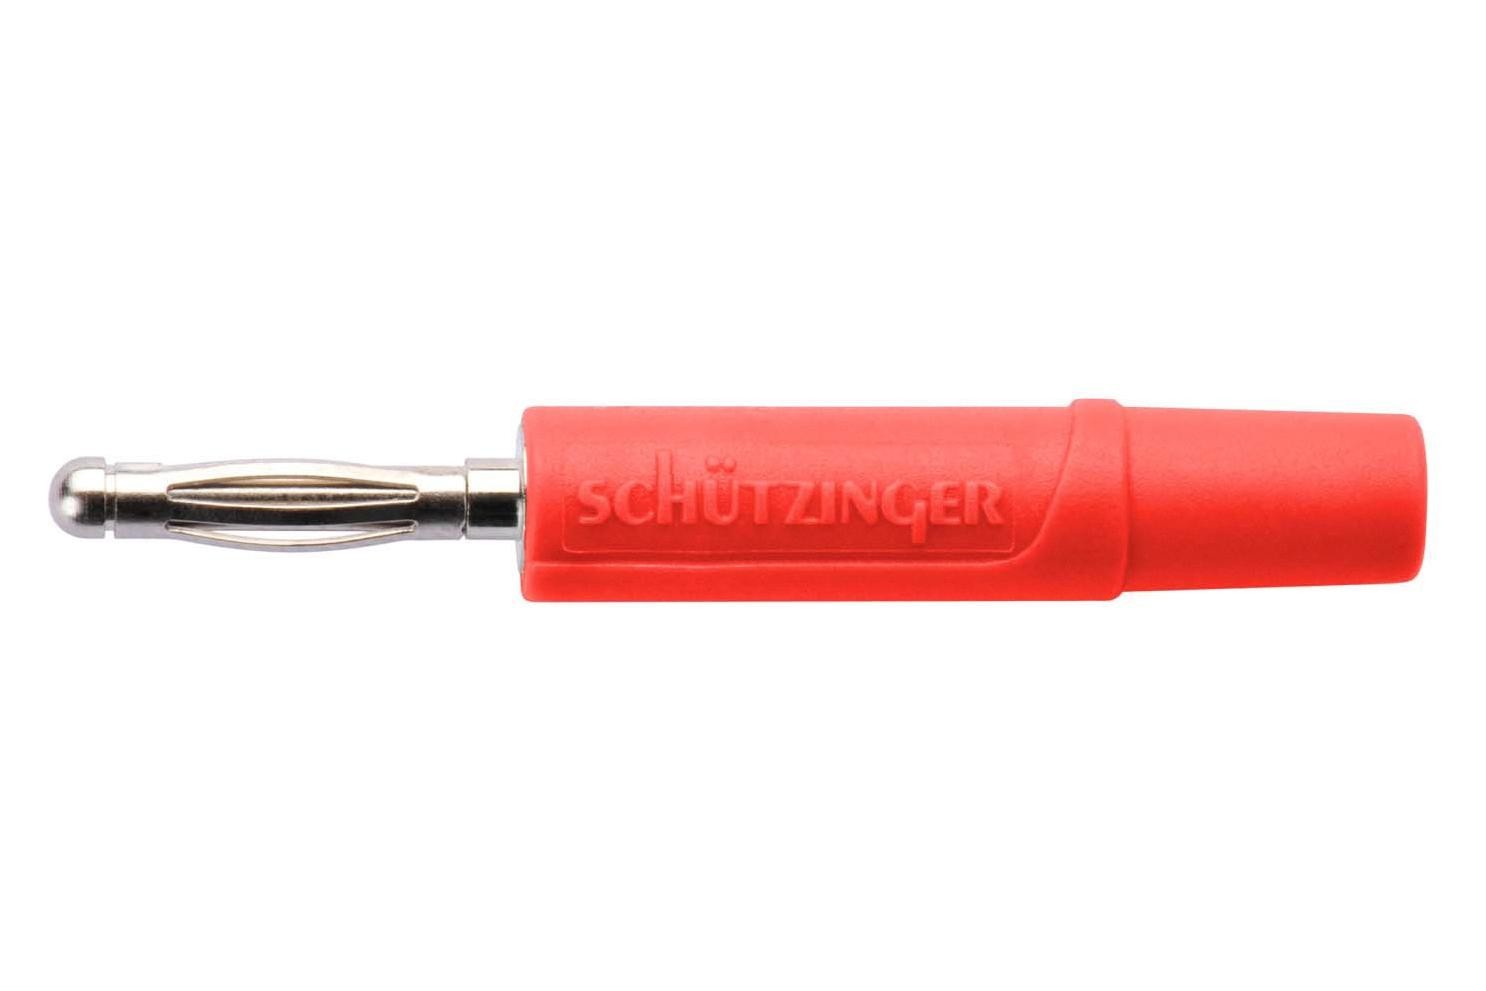 Schutzinger Fk 02 L NI / Rt Connector, Banana, Plug, 10A, Red, Solder